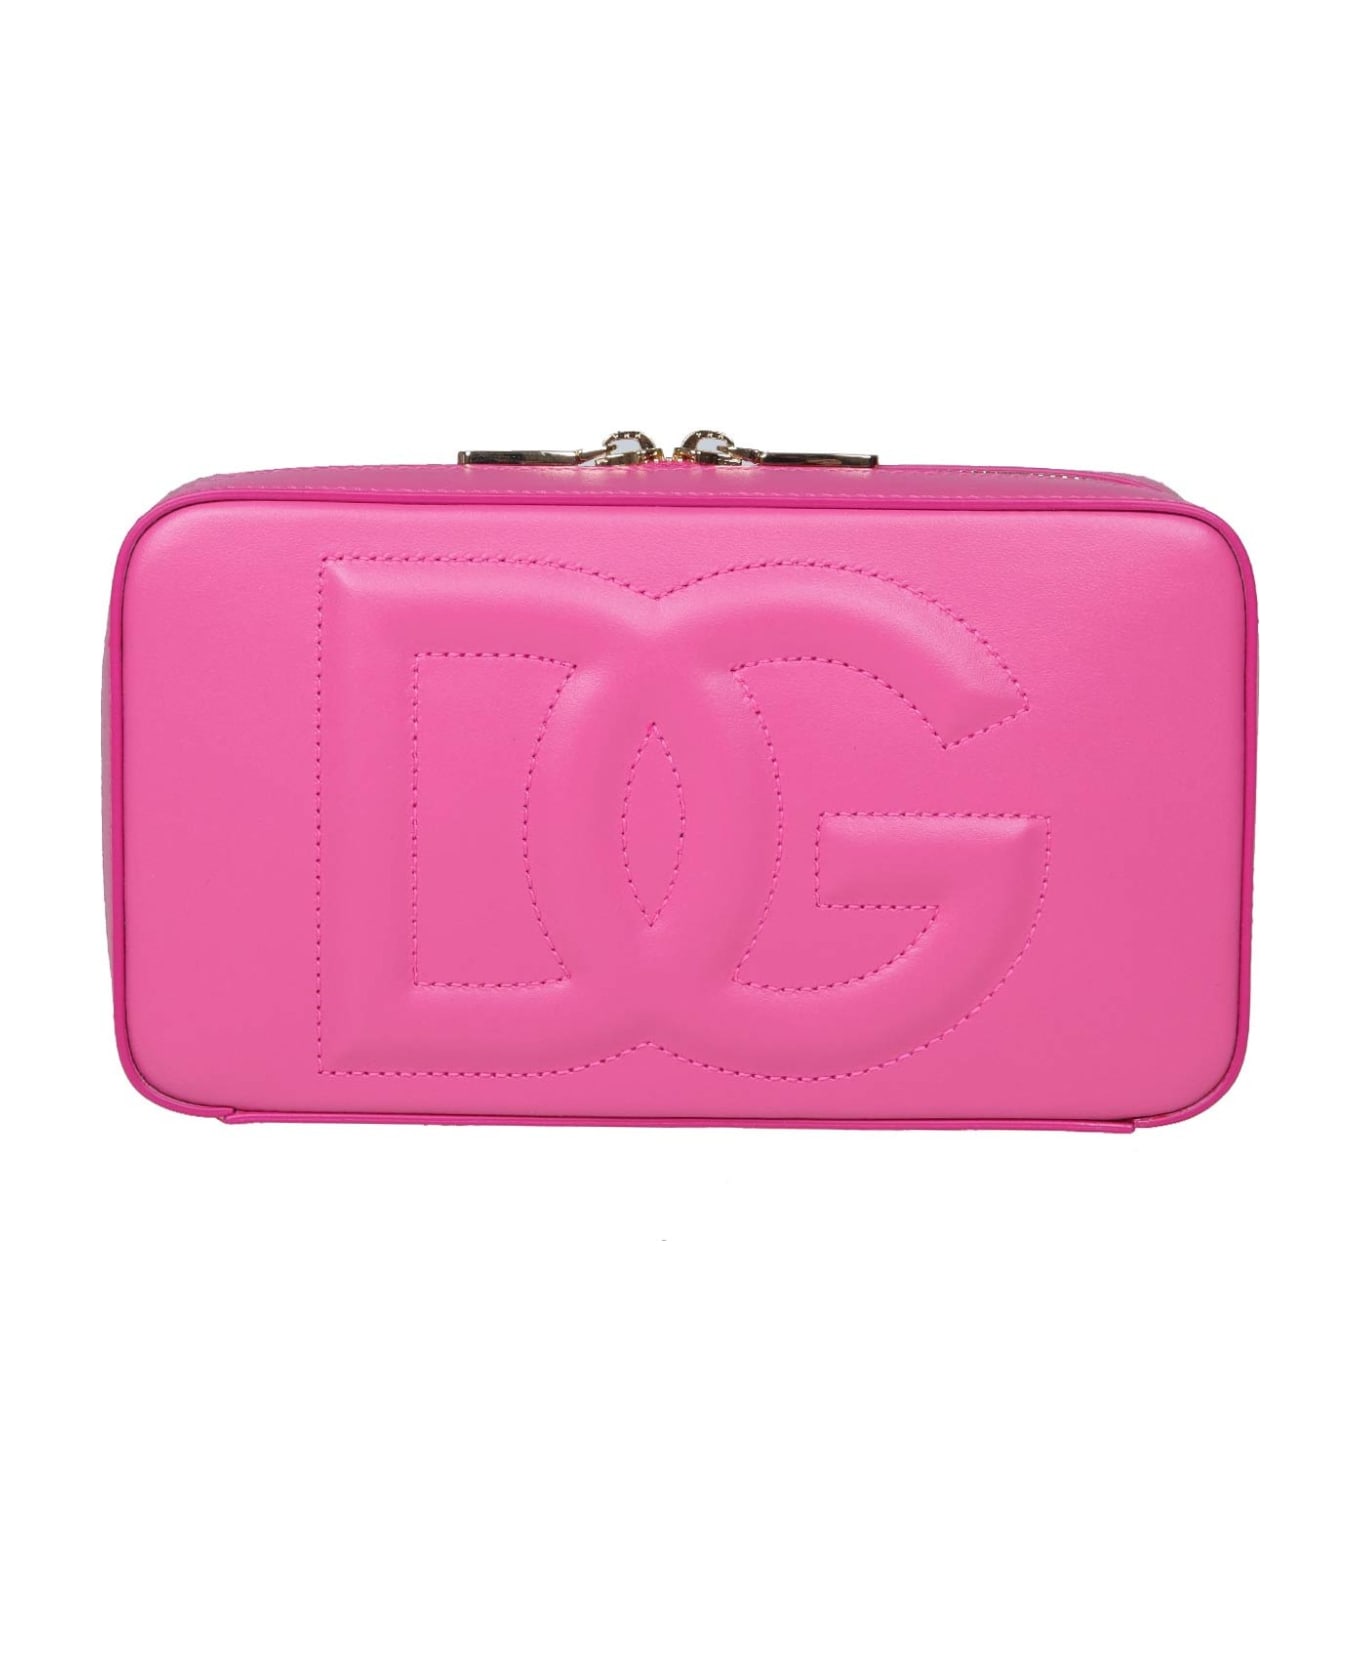 Dolce & Gabbana Dolce E Gabbana Case Bedroom Bag In Maison Calfskin Color Wisteria - Lilac